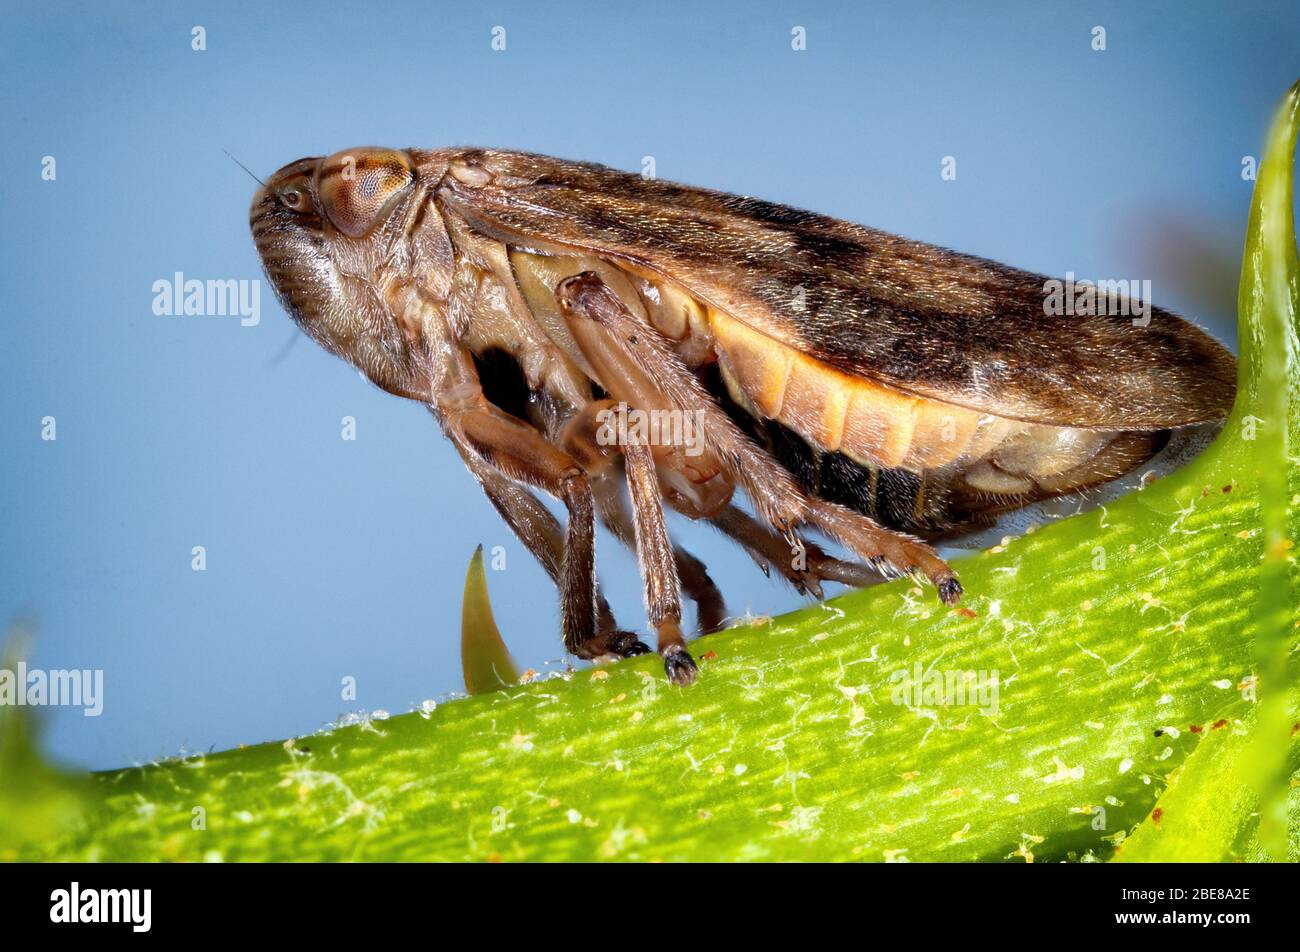 Adult spittle bug on a bramble stem Stock Photo